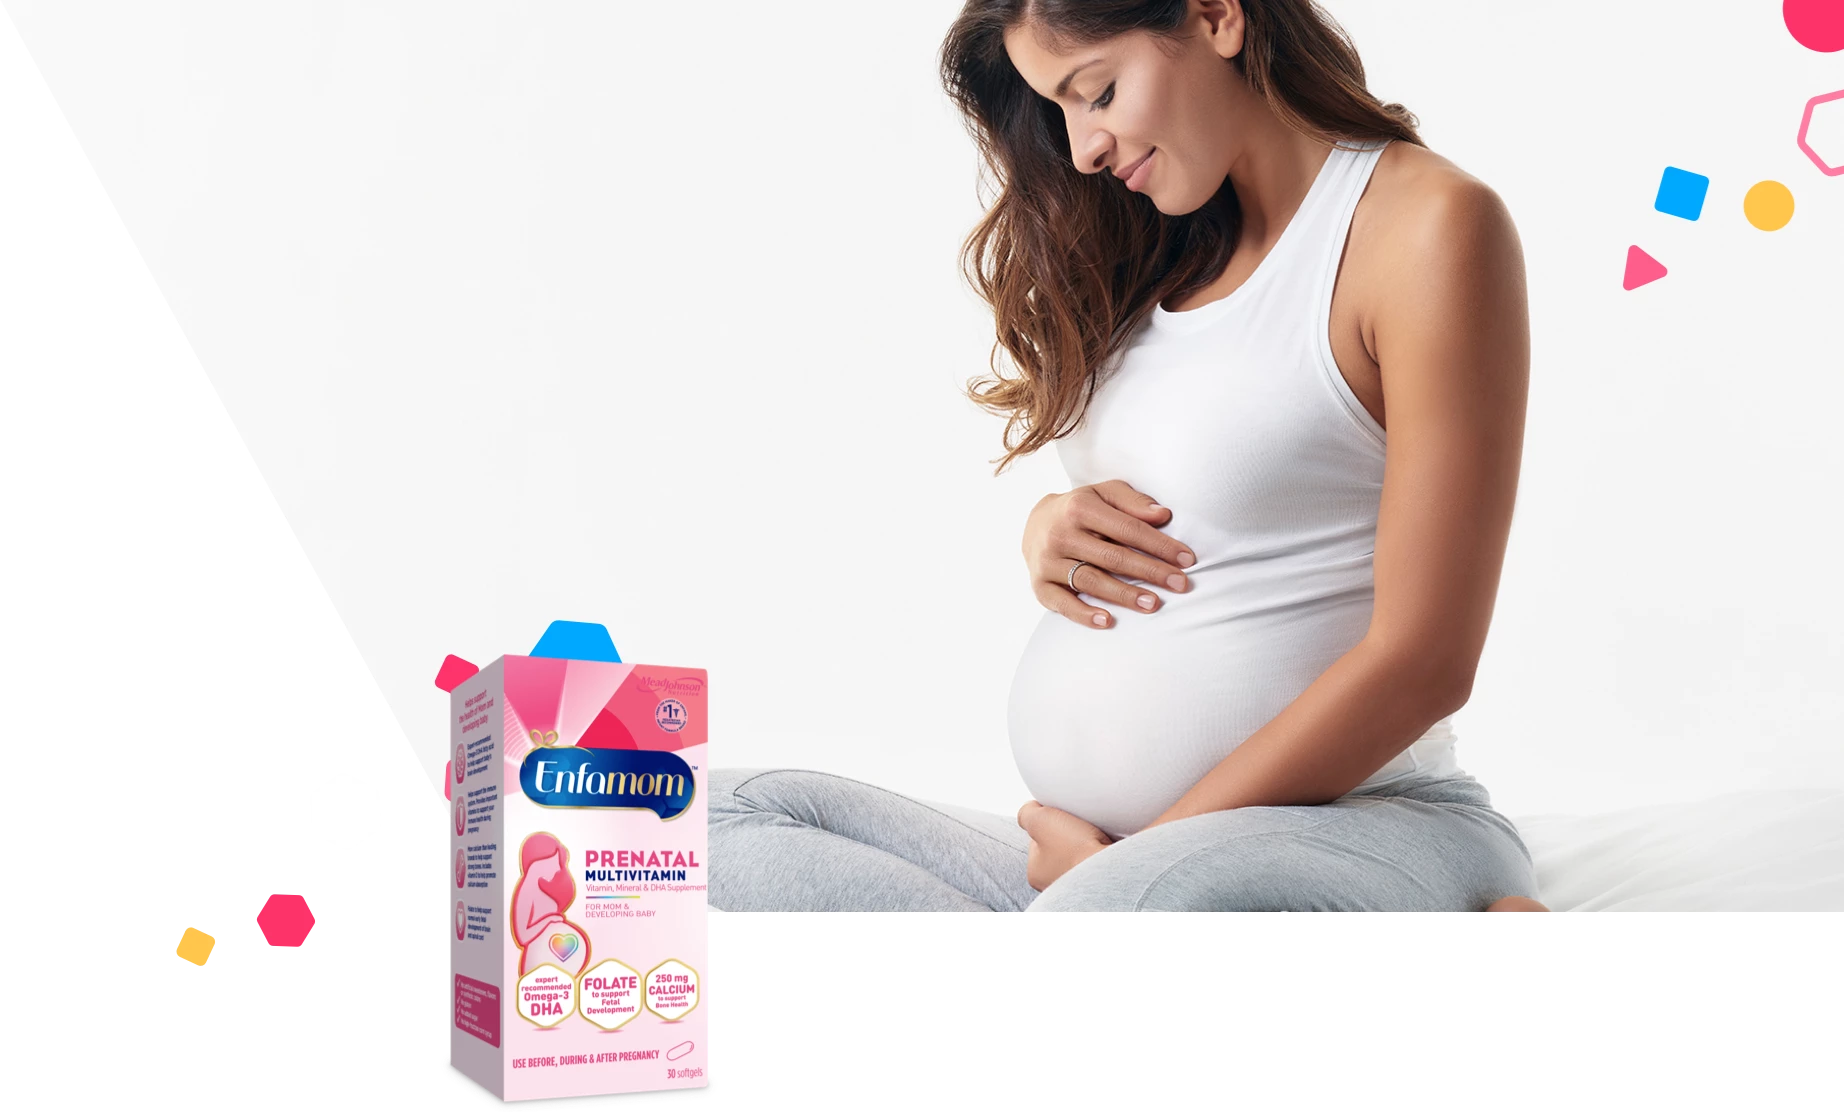 Women holding pregnant belly next to Enfamom™ Prenatal Vitamins